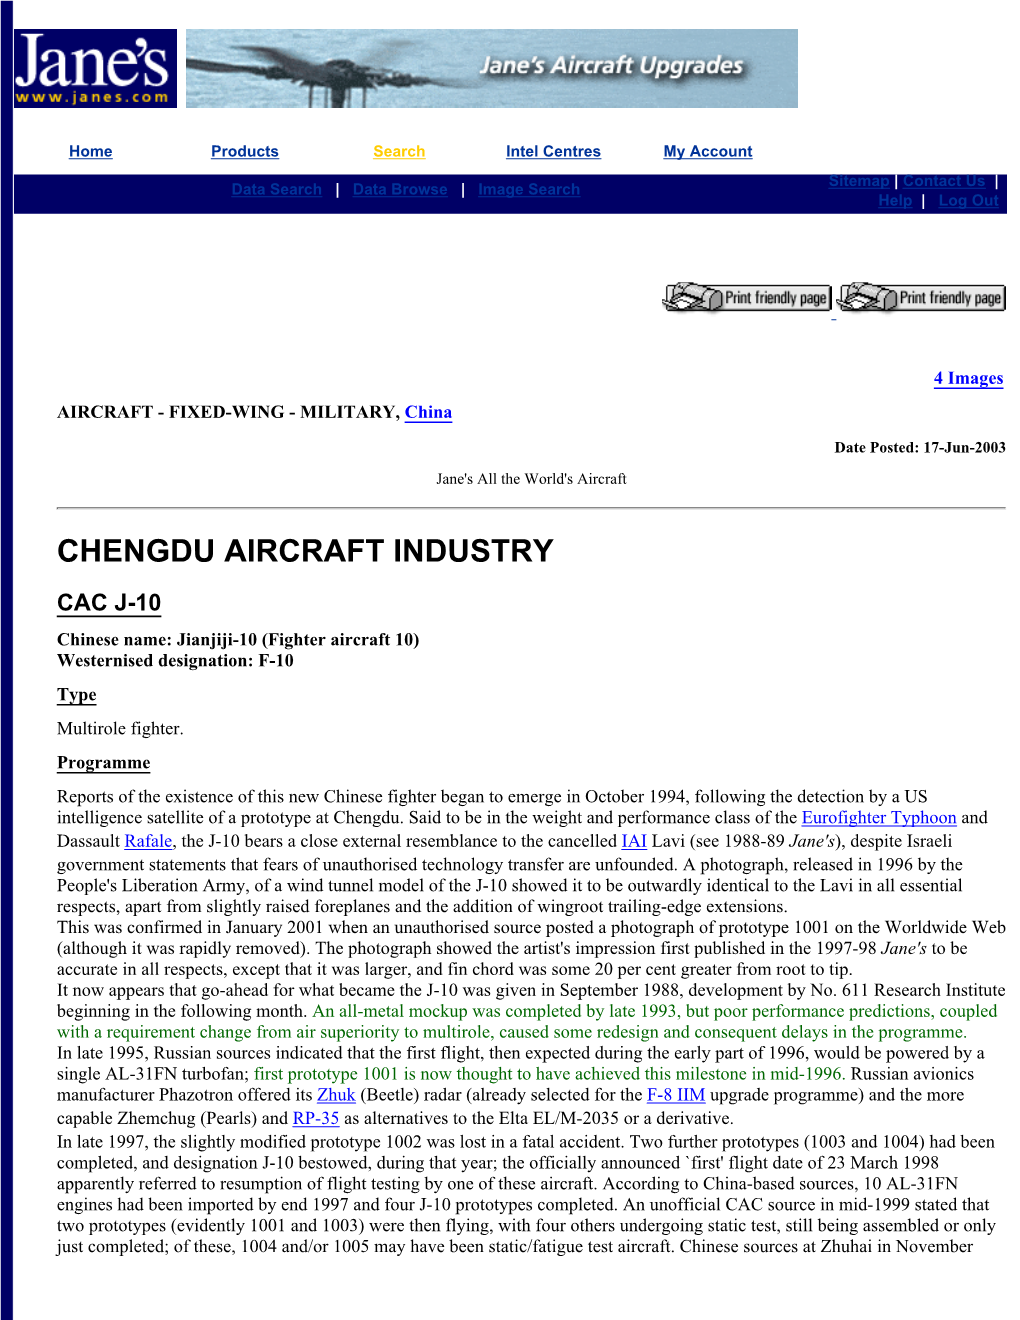 MILITARY/China/CHENGDU AIRCRAFT INDUSTRY/CAC J-10